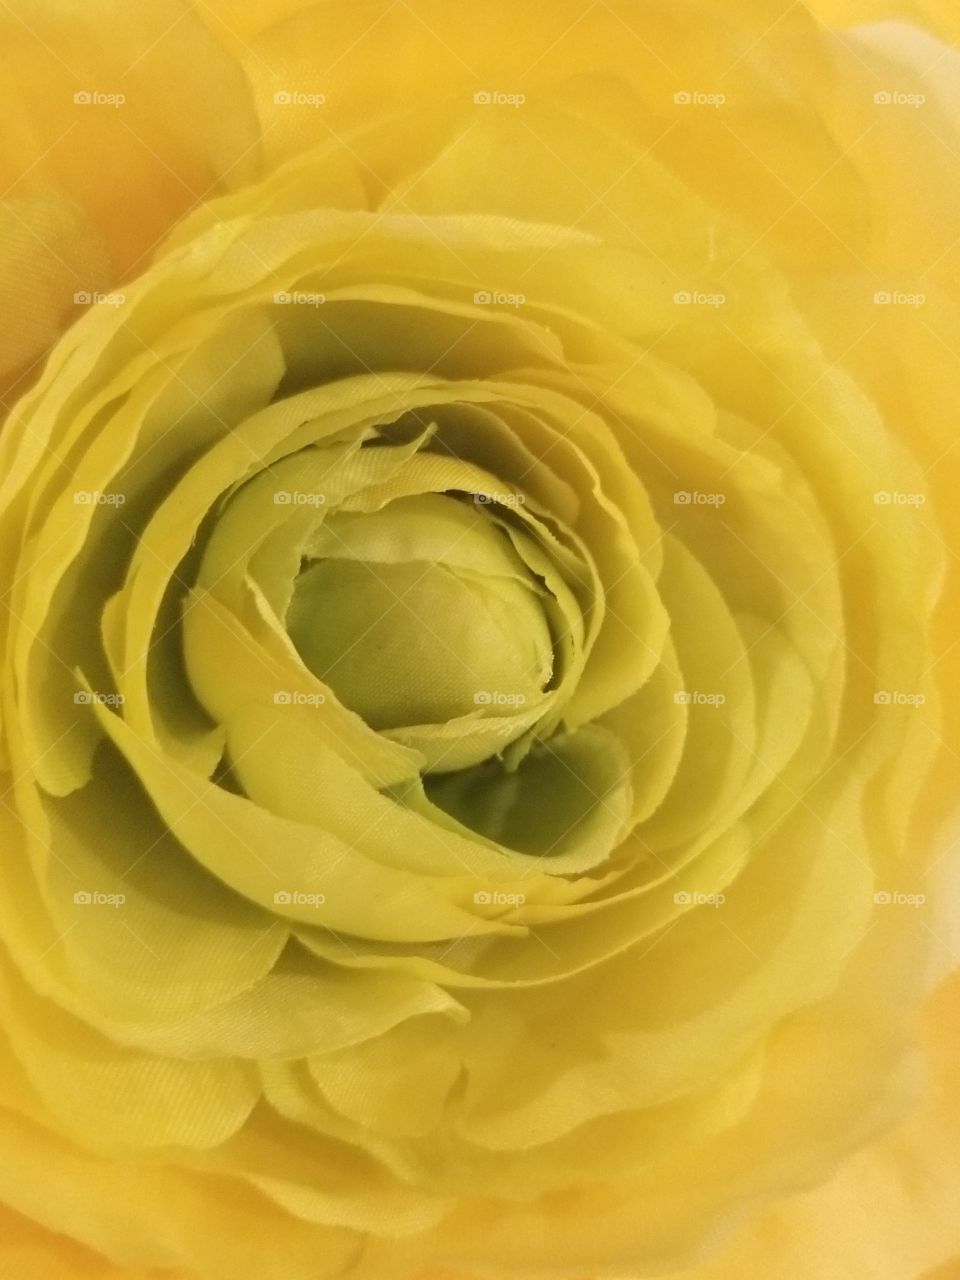 Cool Yellow flower